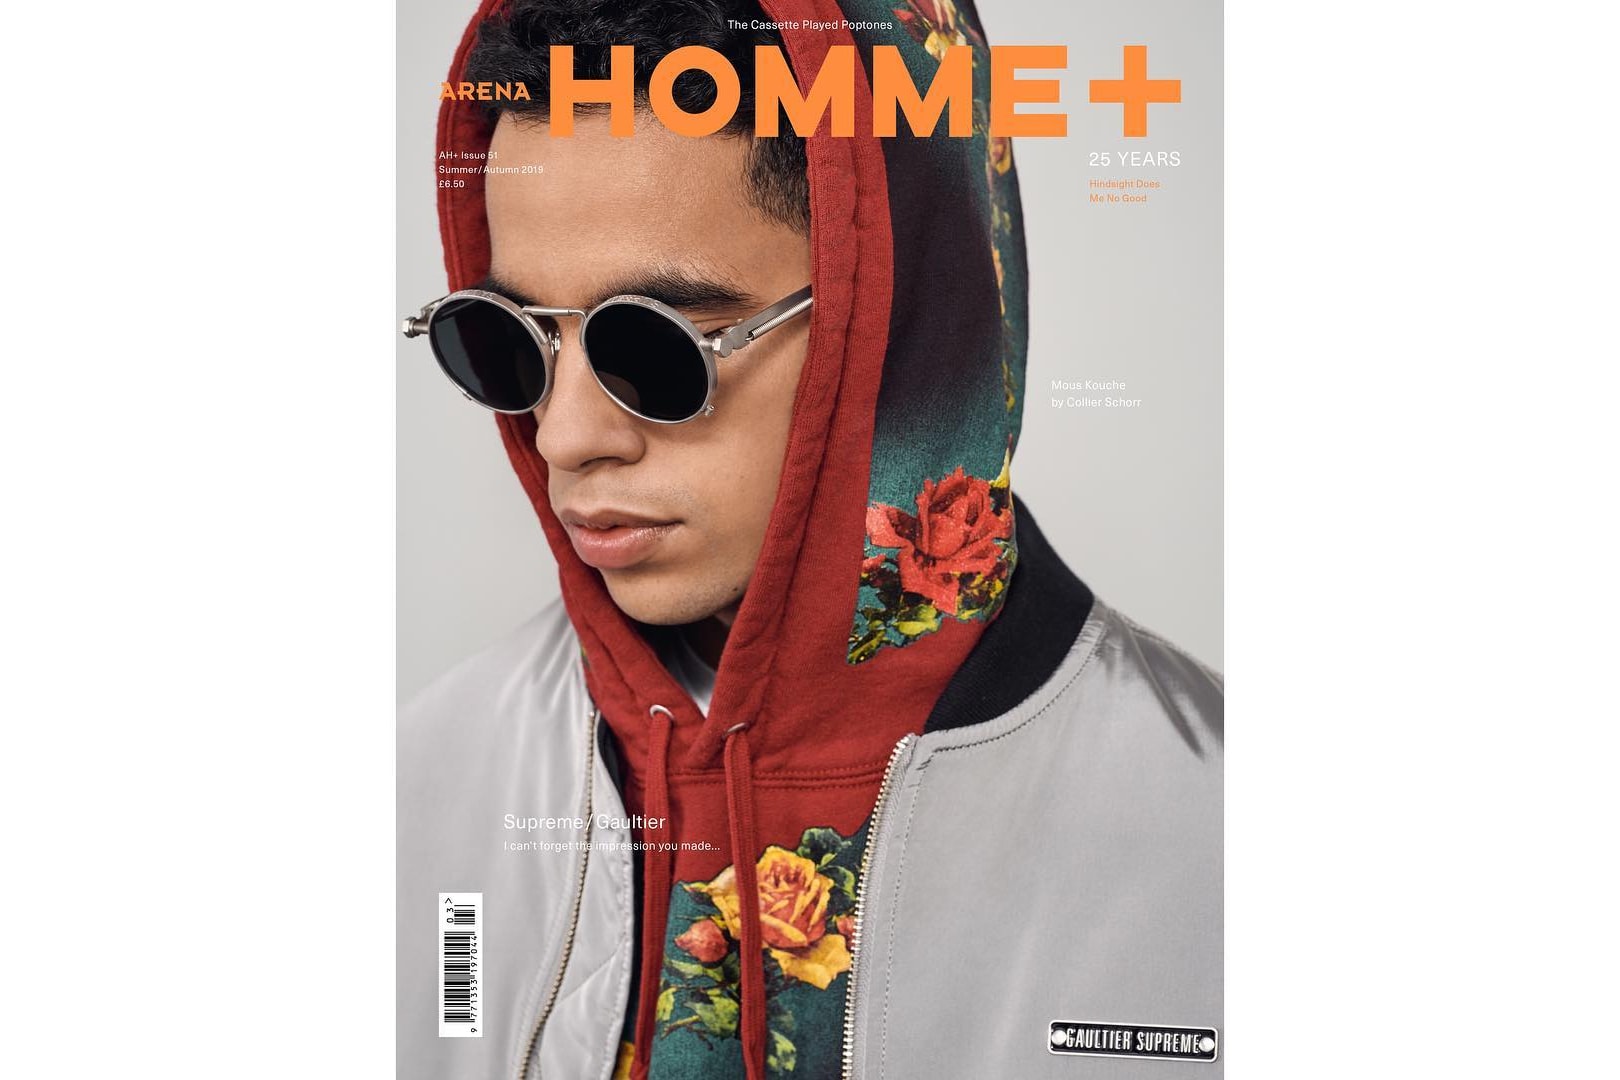 《Arena HOMME+》最新一期封面曝光 Supreme x Jean Paul Gaultier 合作系列單品